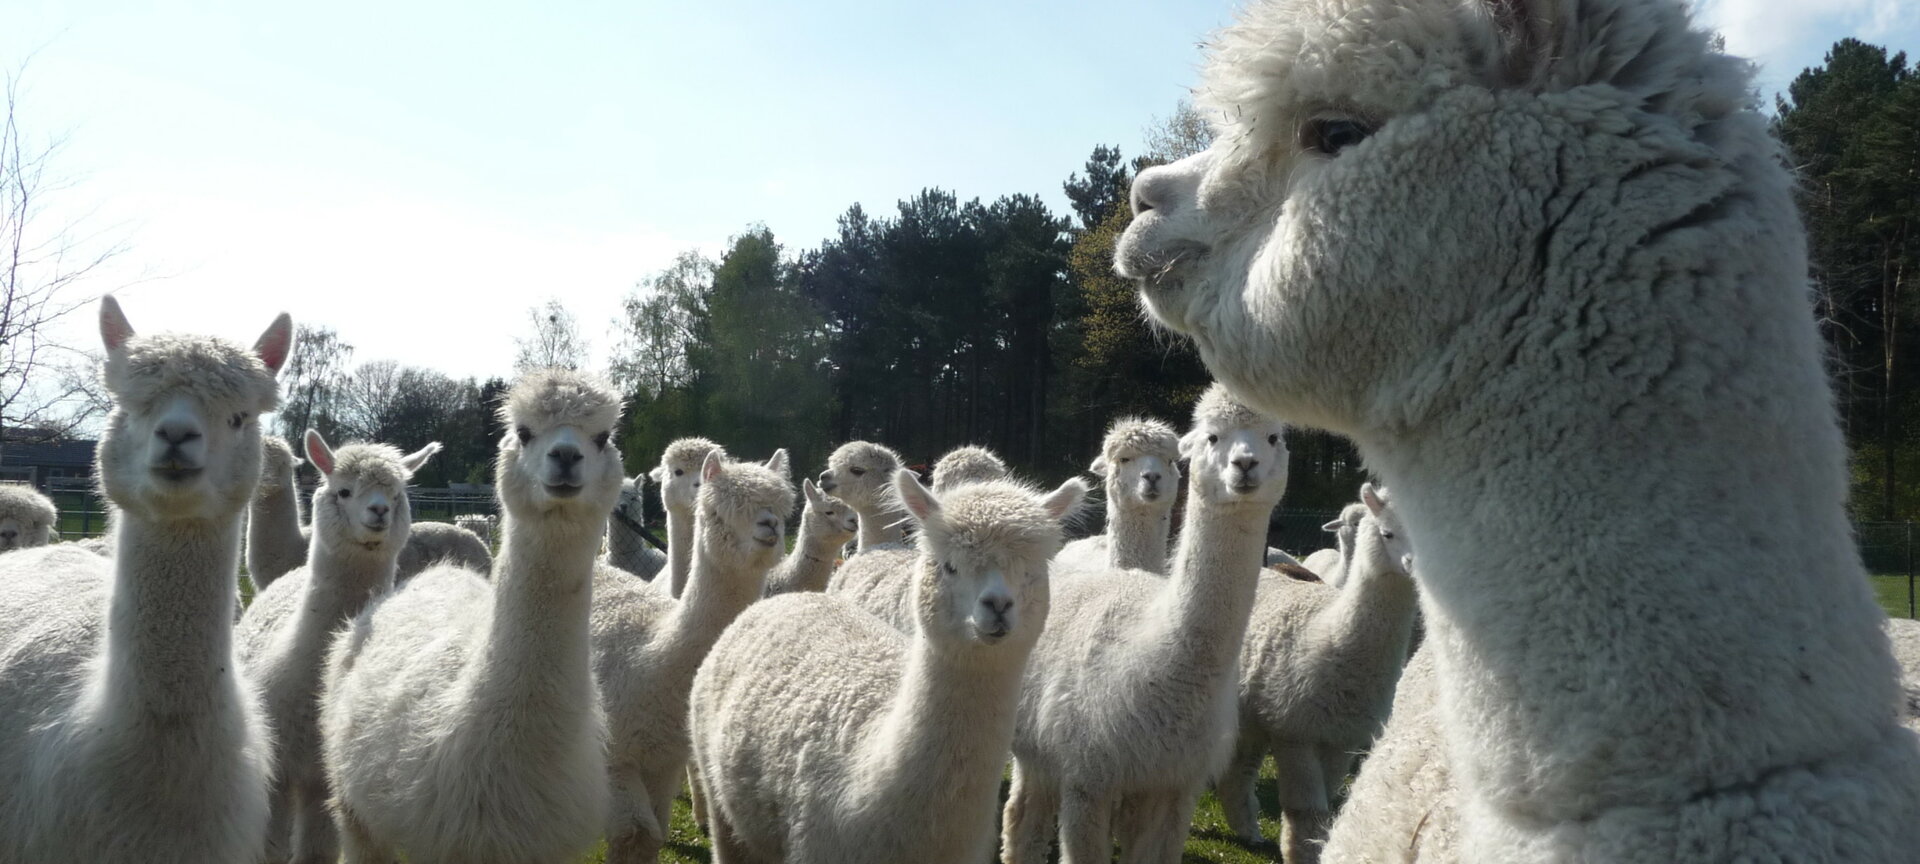 De Alpacaboerderij Bocholt - Alpaca's